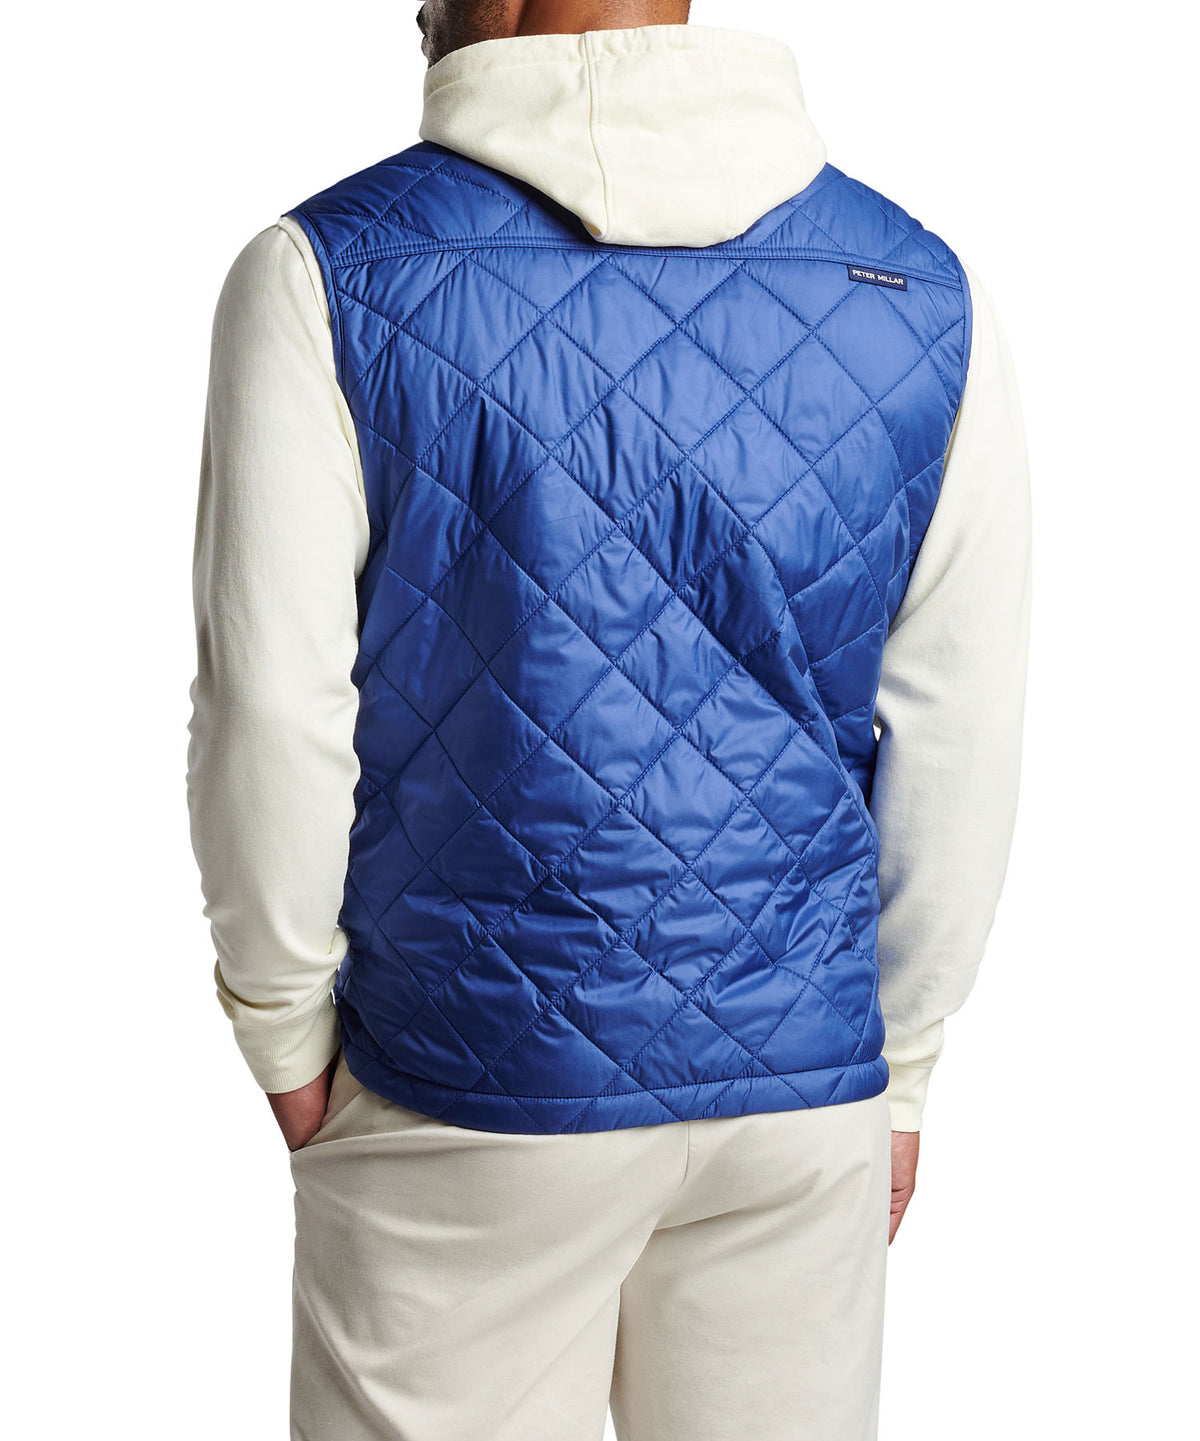 Peter Millar Bedford Outerwear Vest, Men's Big & Tall